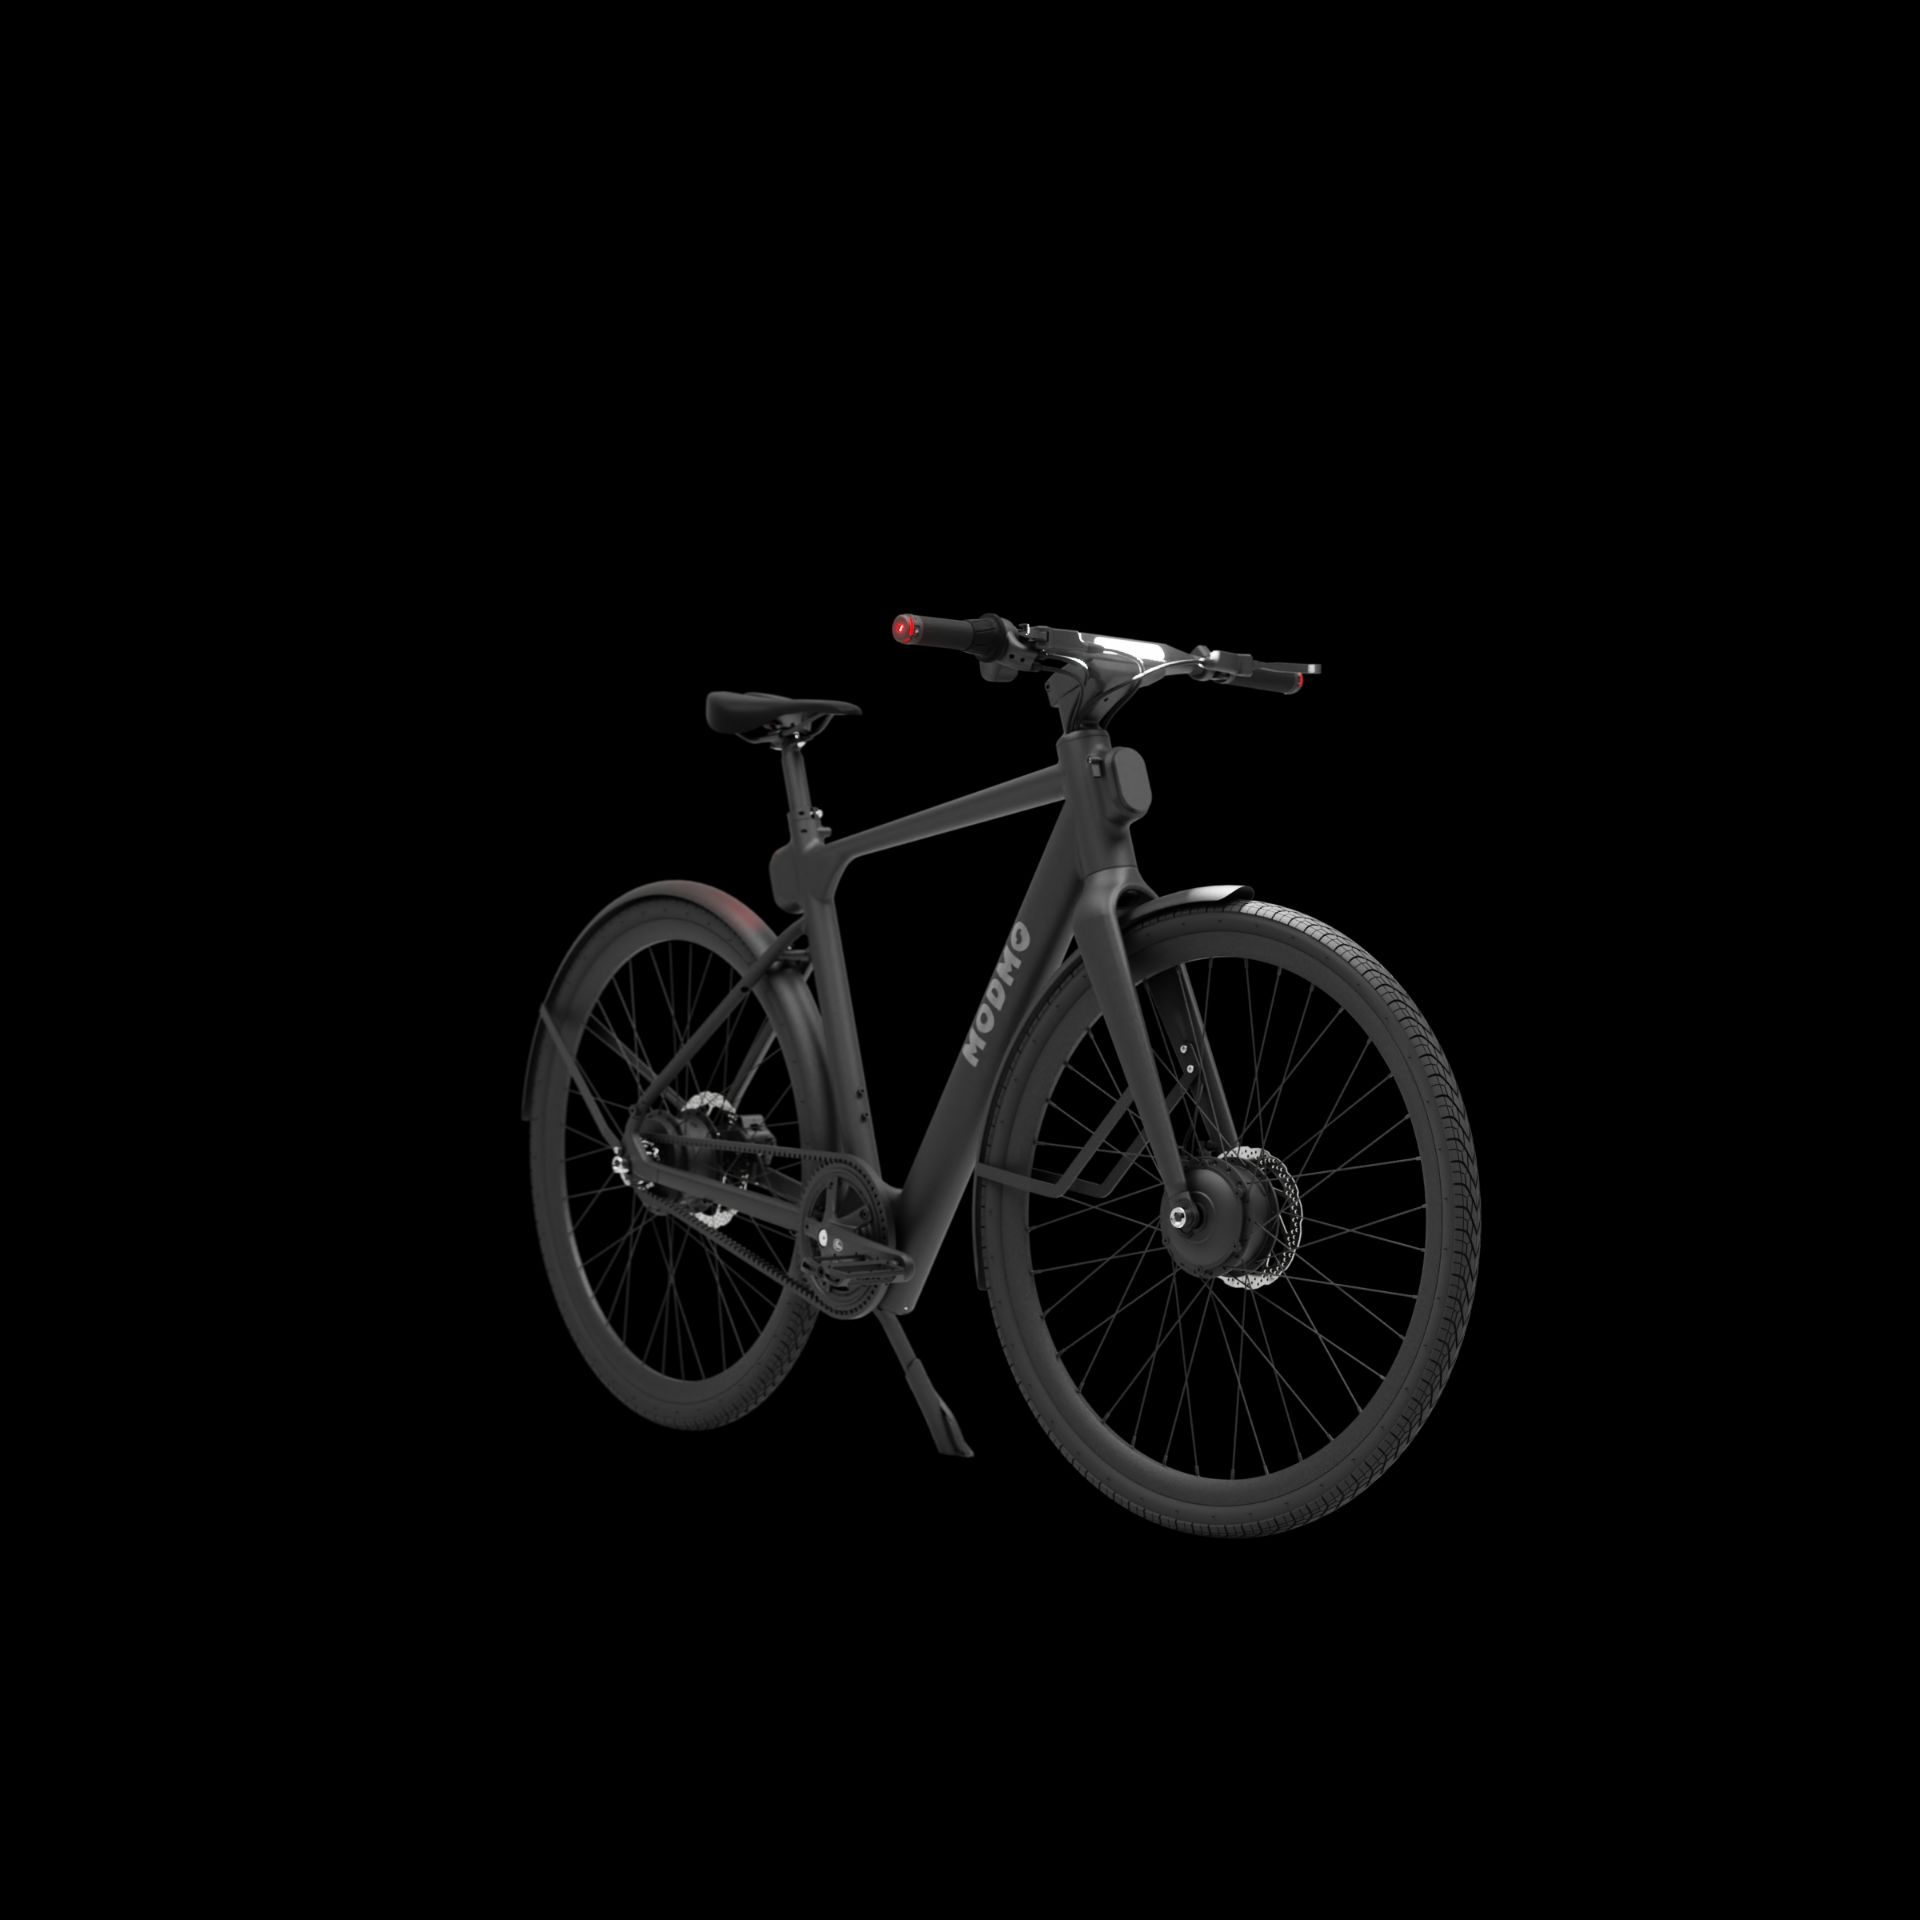 Modmo Saigon+ Electric Bicycle - RRP £2800 - Size S (Rider: 140-155cm) - Image 9 of 15